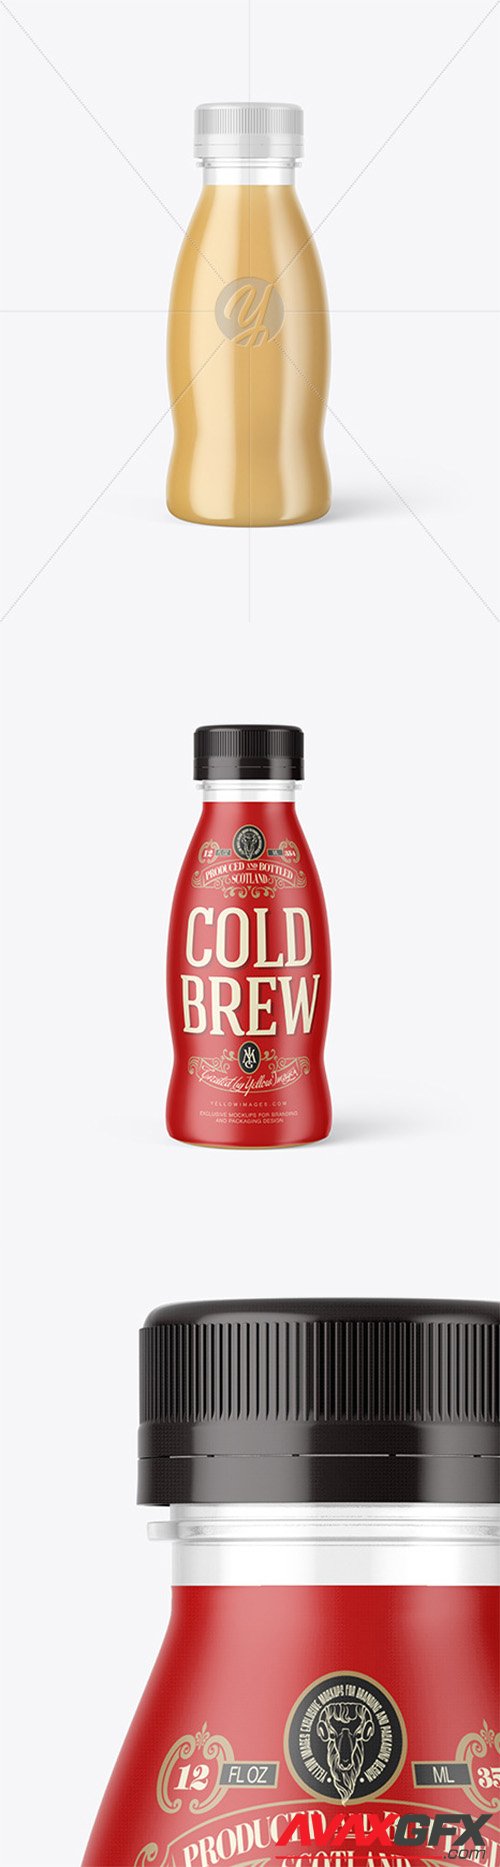 Plastic Bottle w/ Cold Brew Coffee Mockup 63168